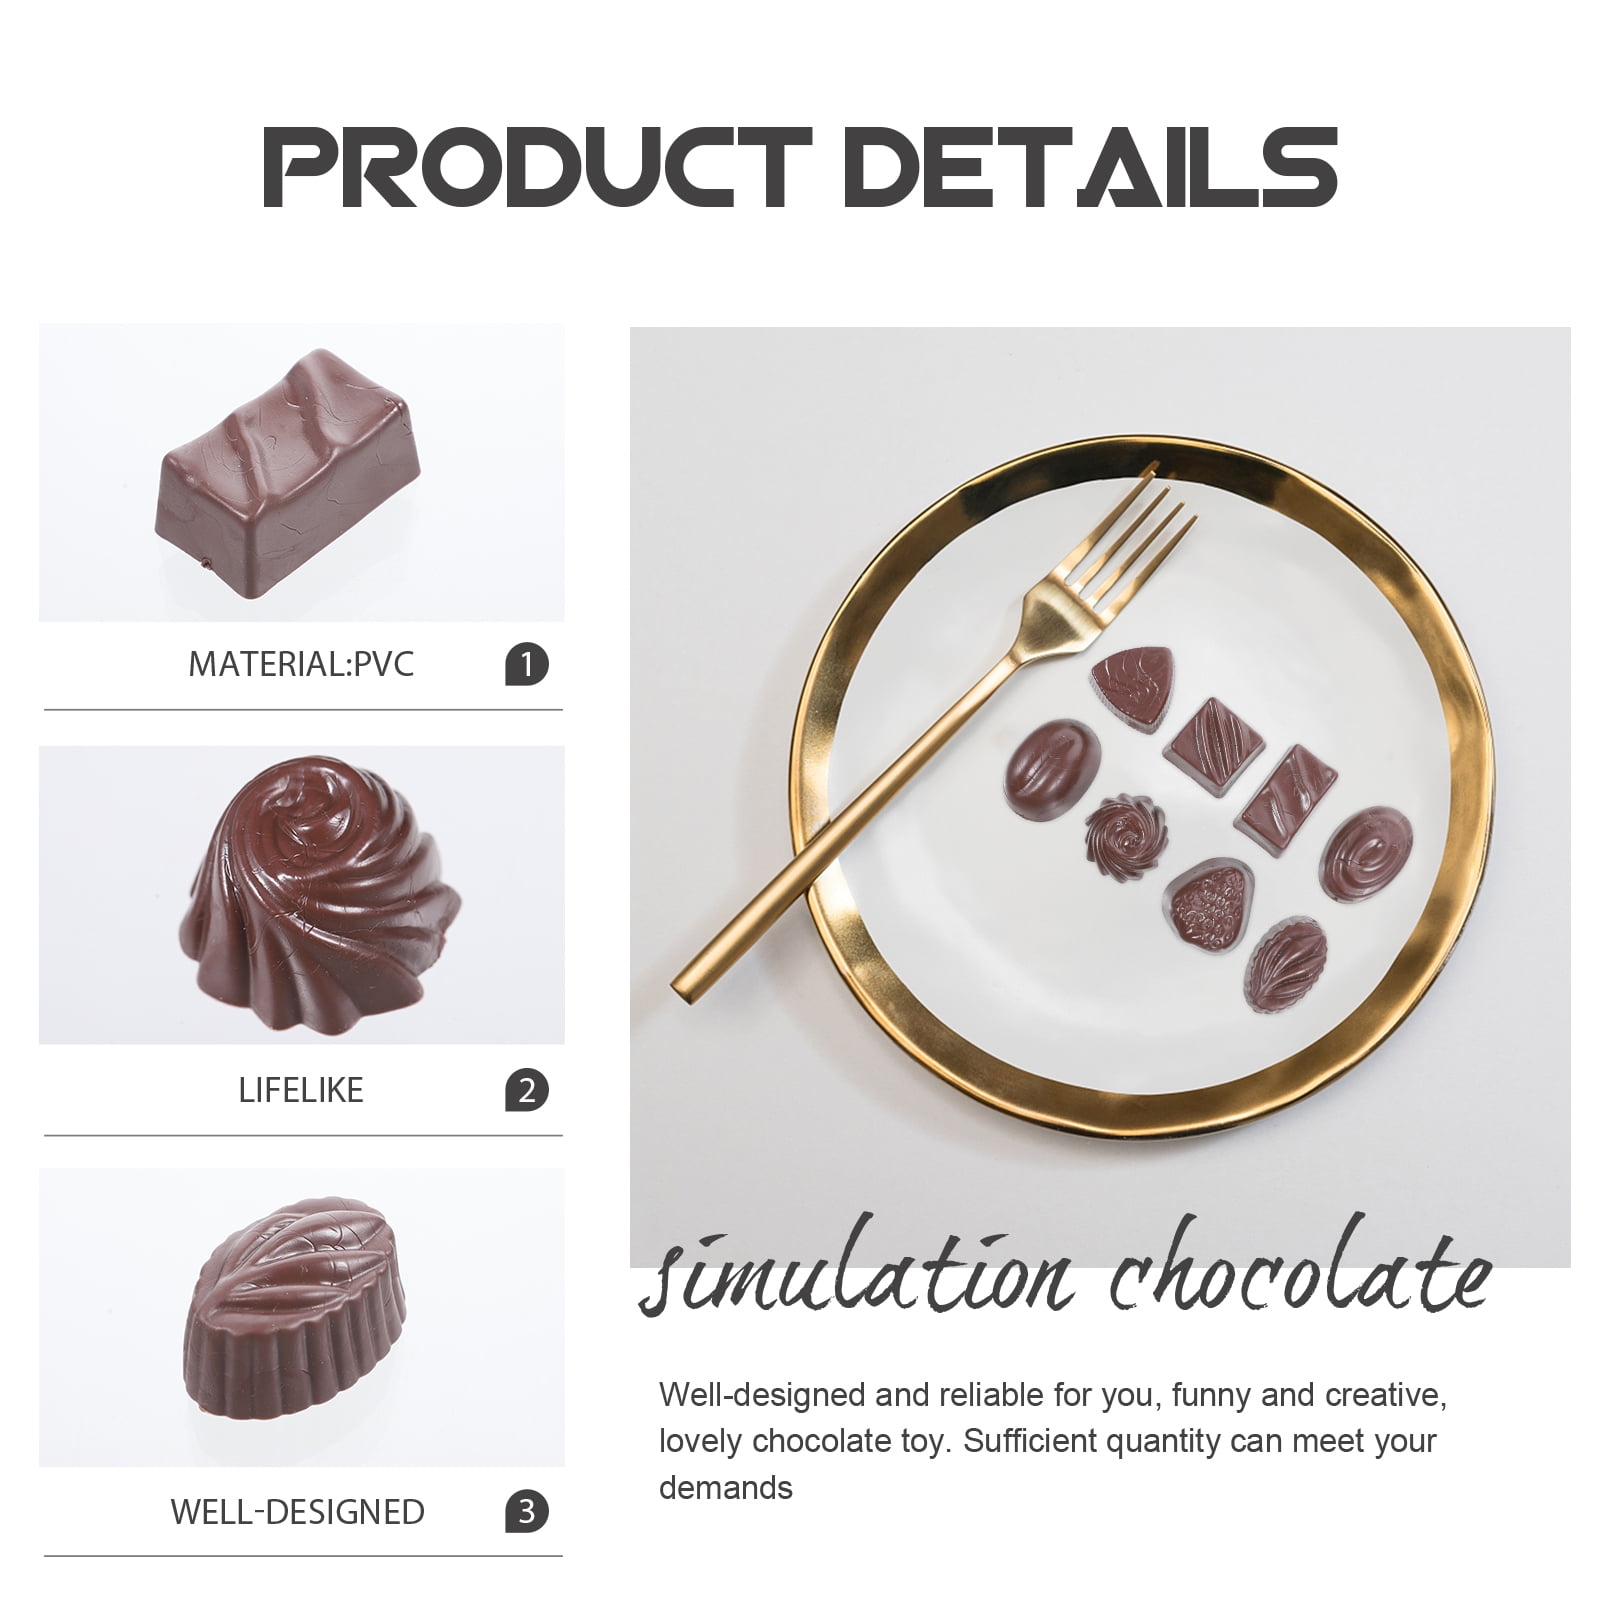 These chocolate tools are definitely realistic : r/mildlyinteresting